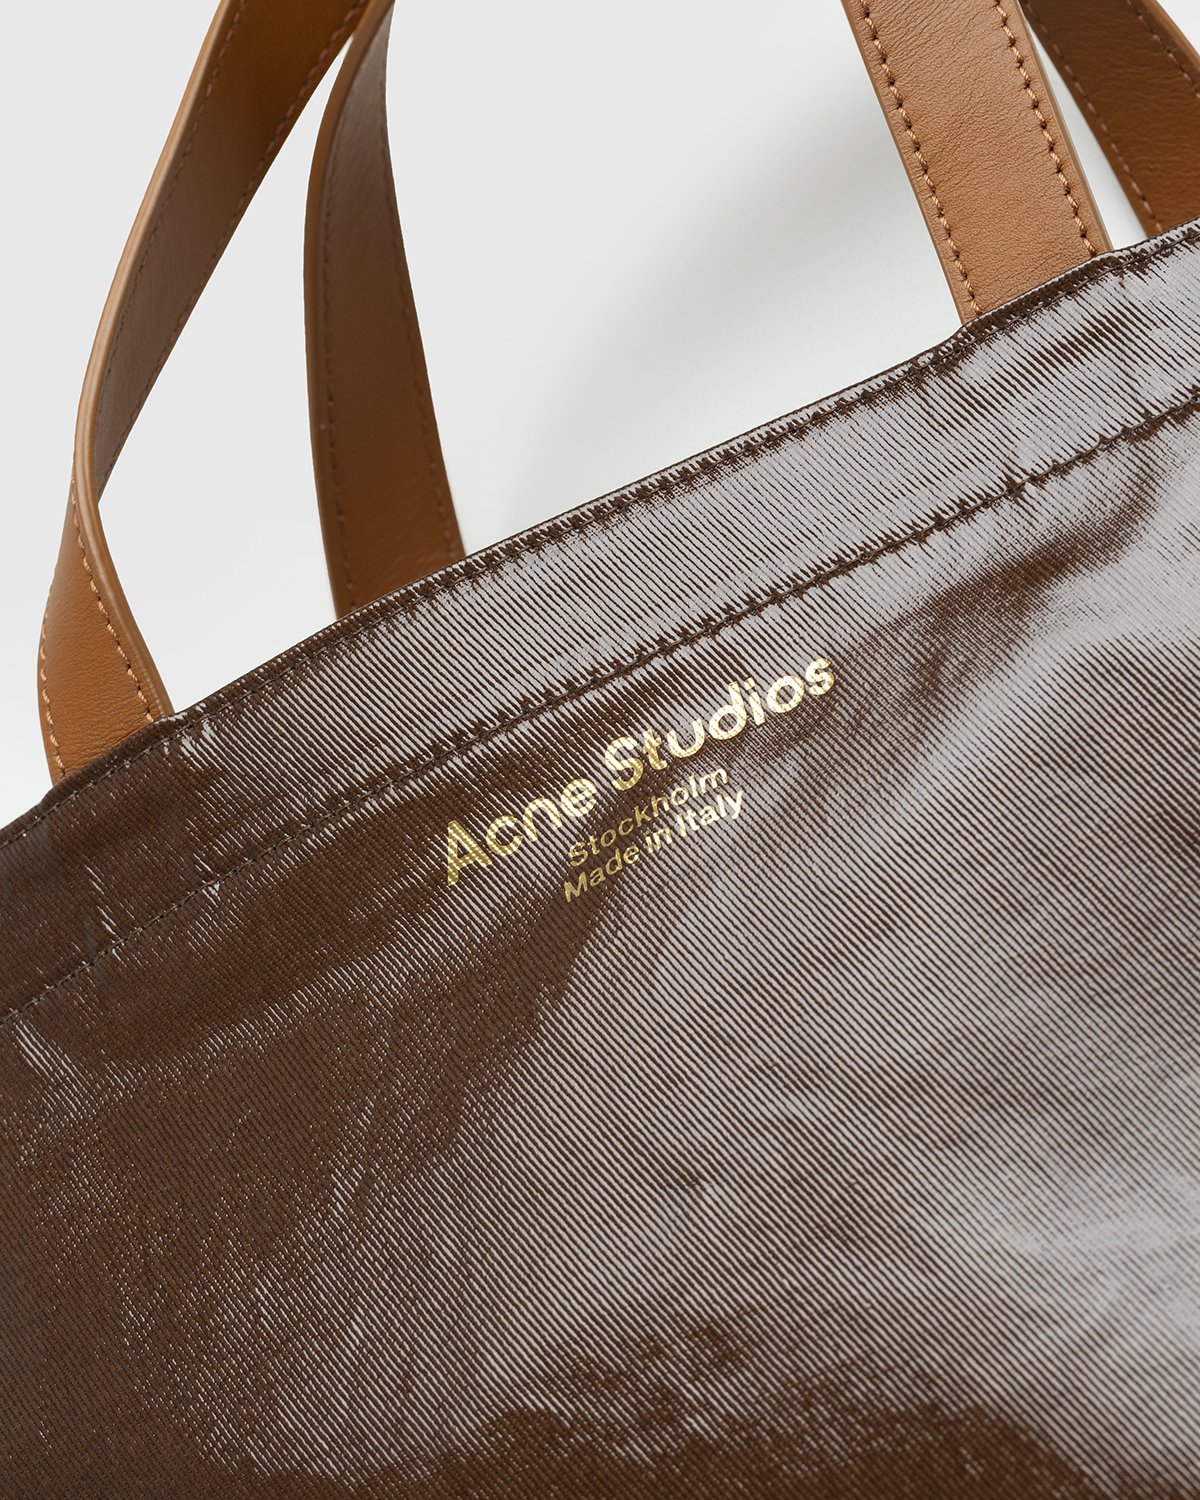 Acne Studios - Shiny Tote Bag Brown - Accessories - Brown - Image 4